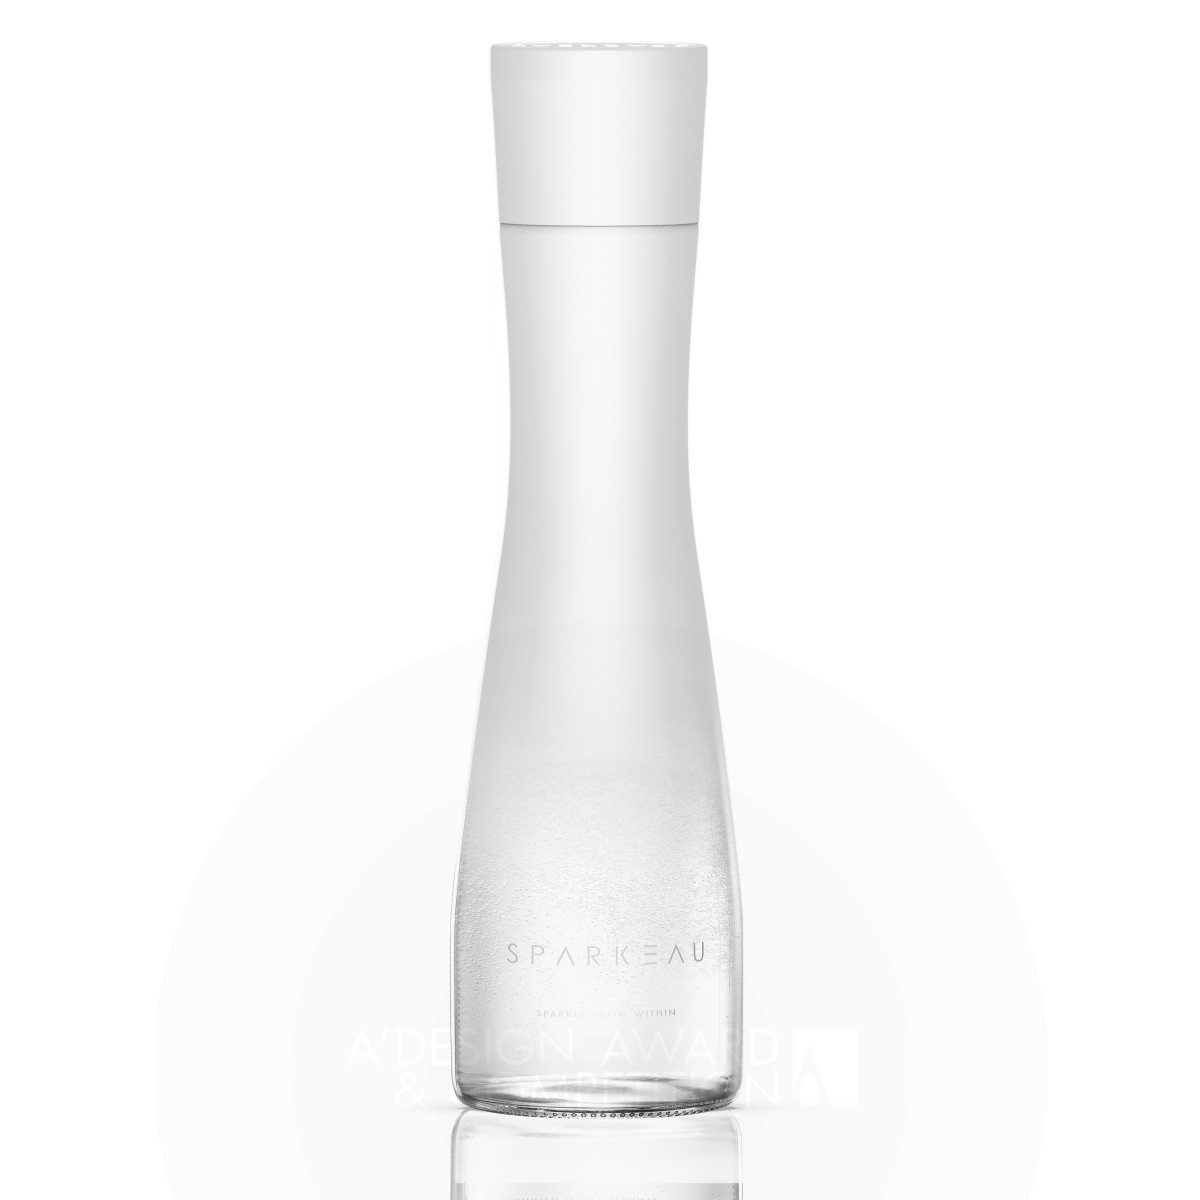 Sparkeau Sparkling Water Bottle by Wei Ping Chen Silver Packaging Design Award Winner 2020 